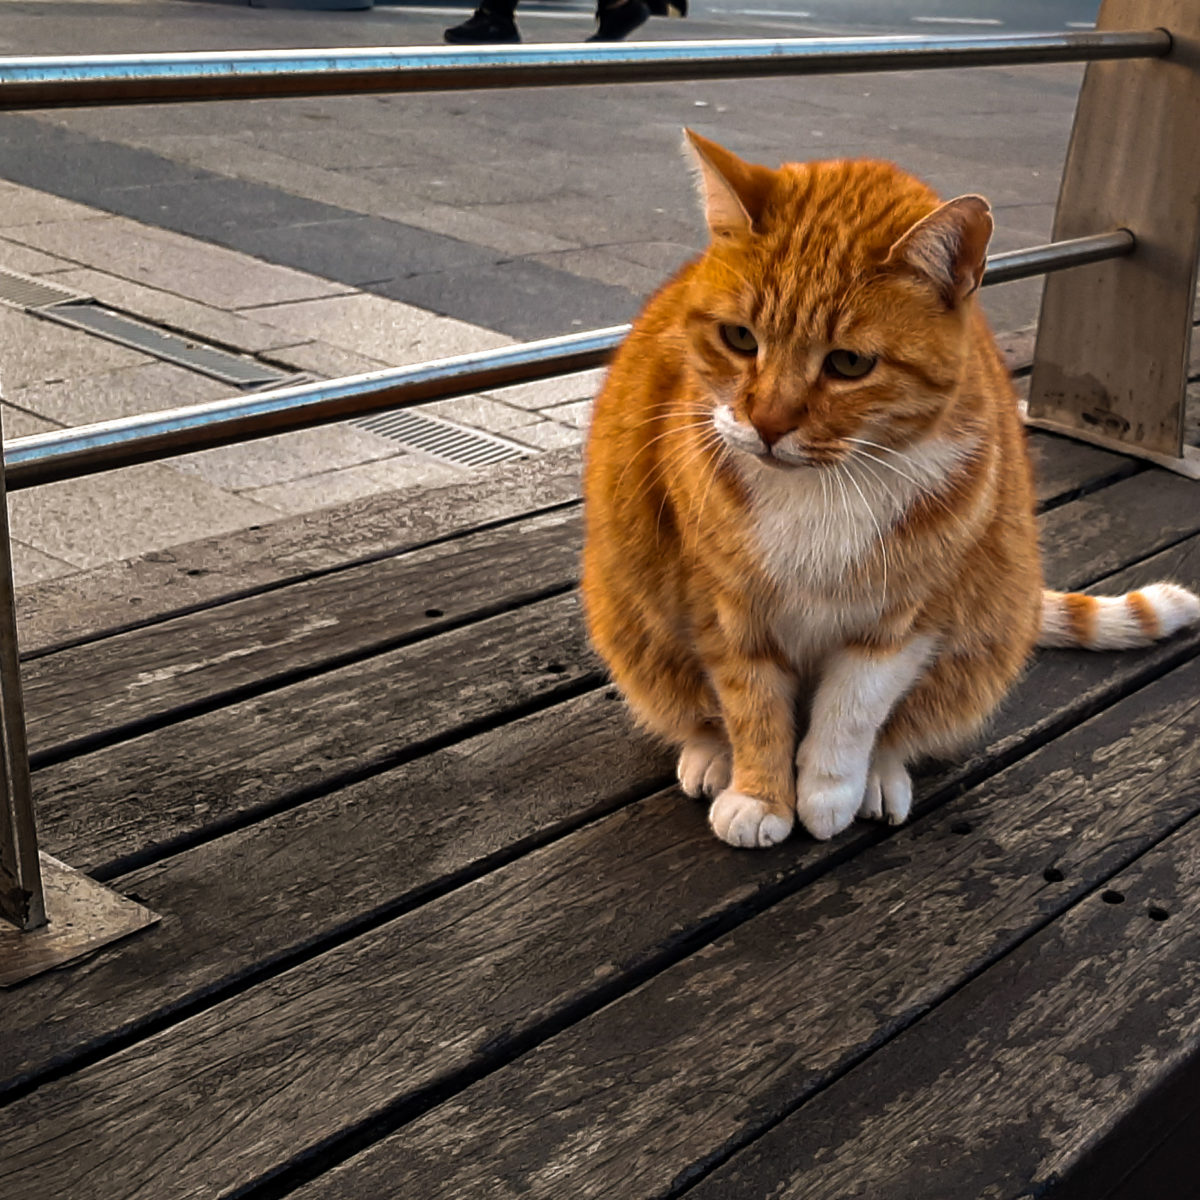 An orange cat sits on a wooden platform on the sidewalk.